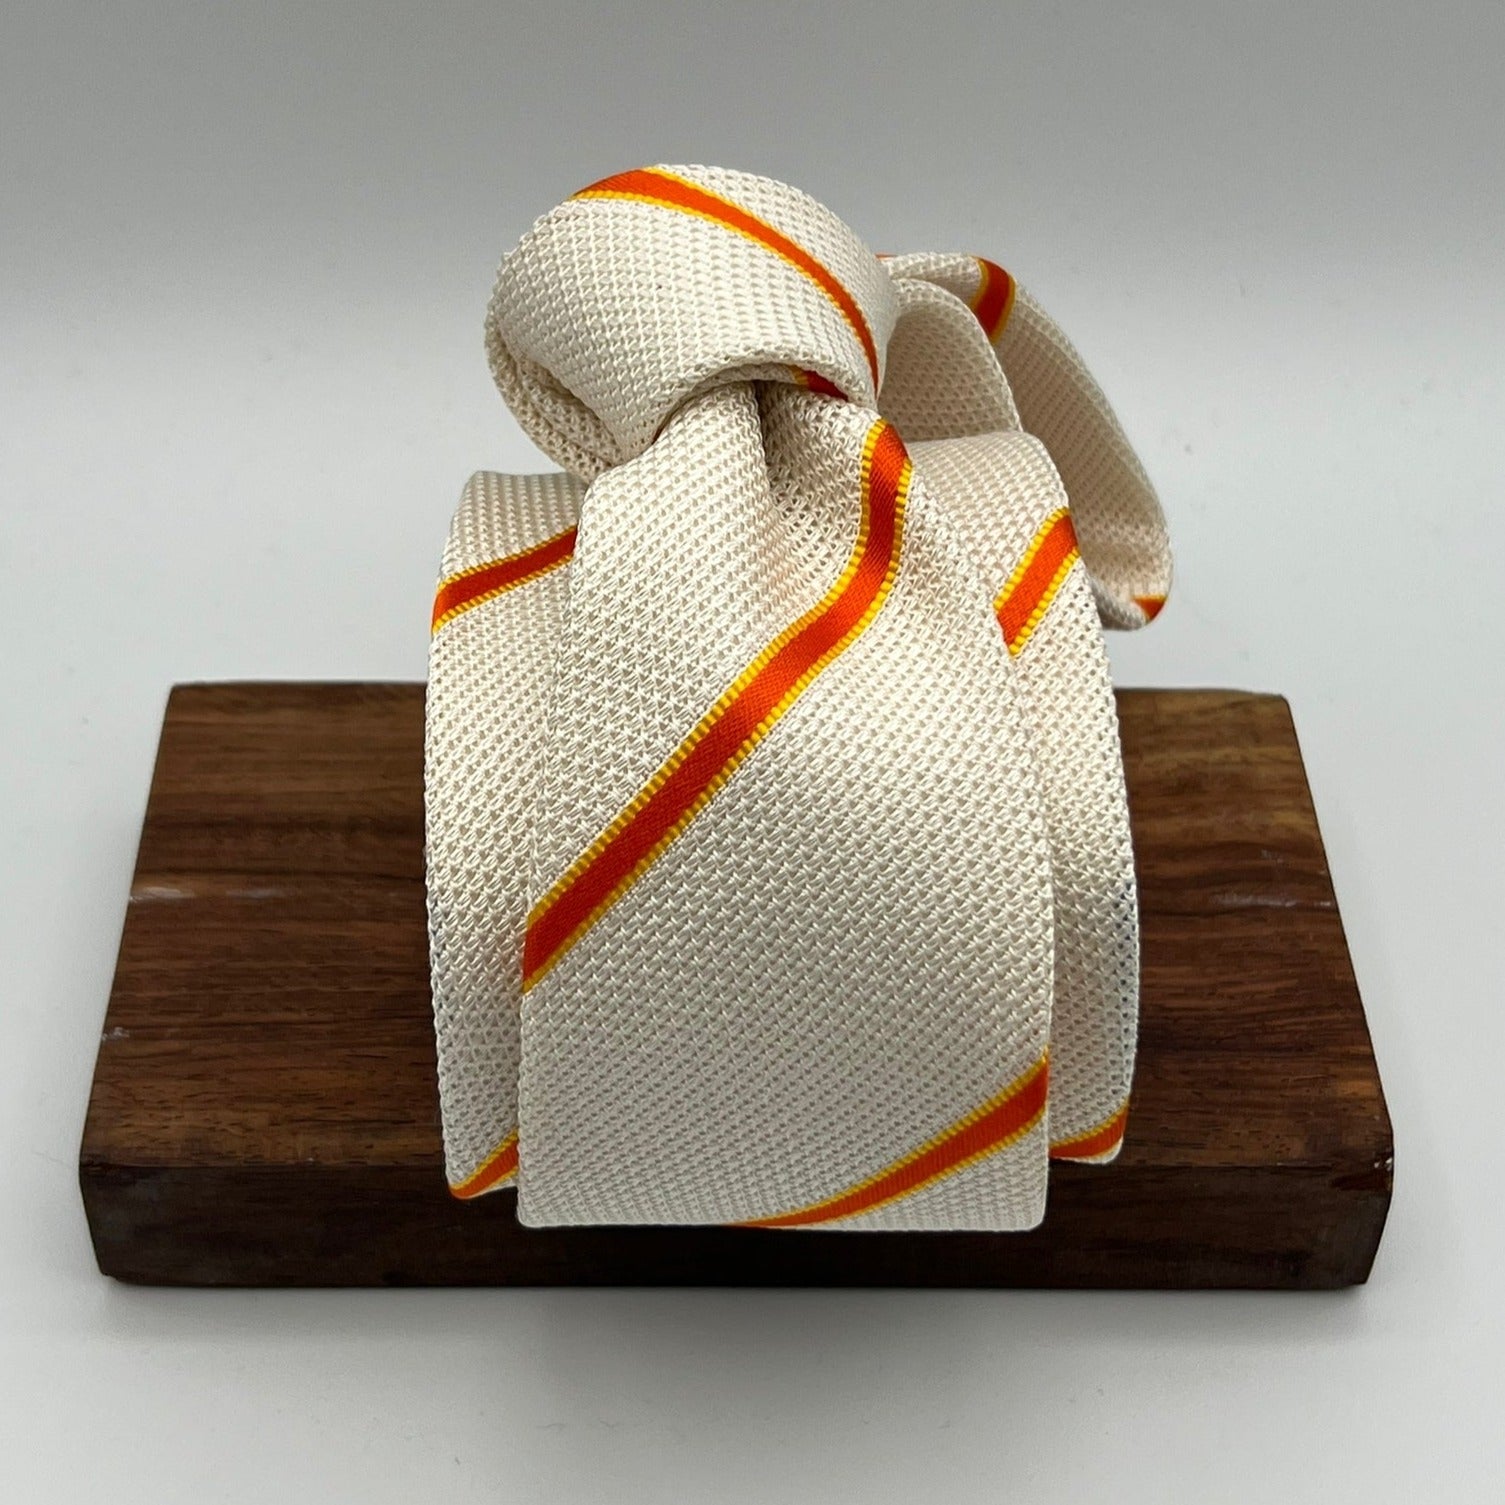 Drake's for Cruciani & Bella 100% Silk Garza Piccola Tipped  White, Orange and Yellow Stripes  Tie Handmade in England 9 cm x 146 cm #5321